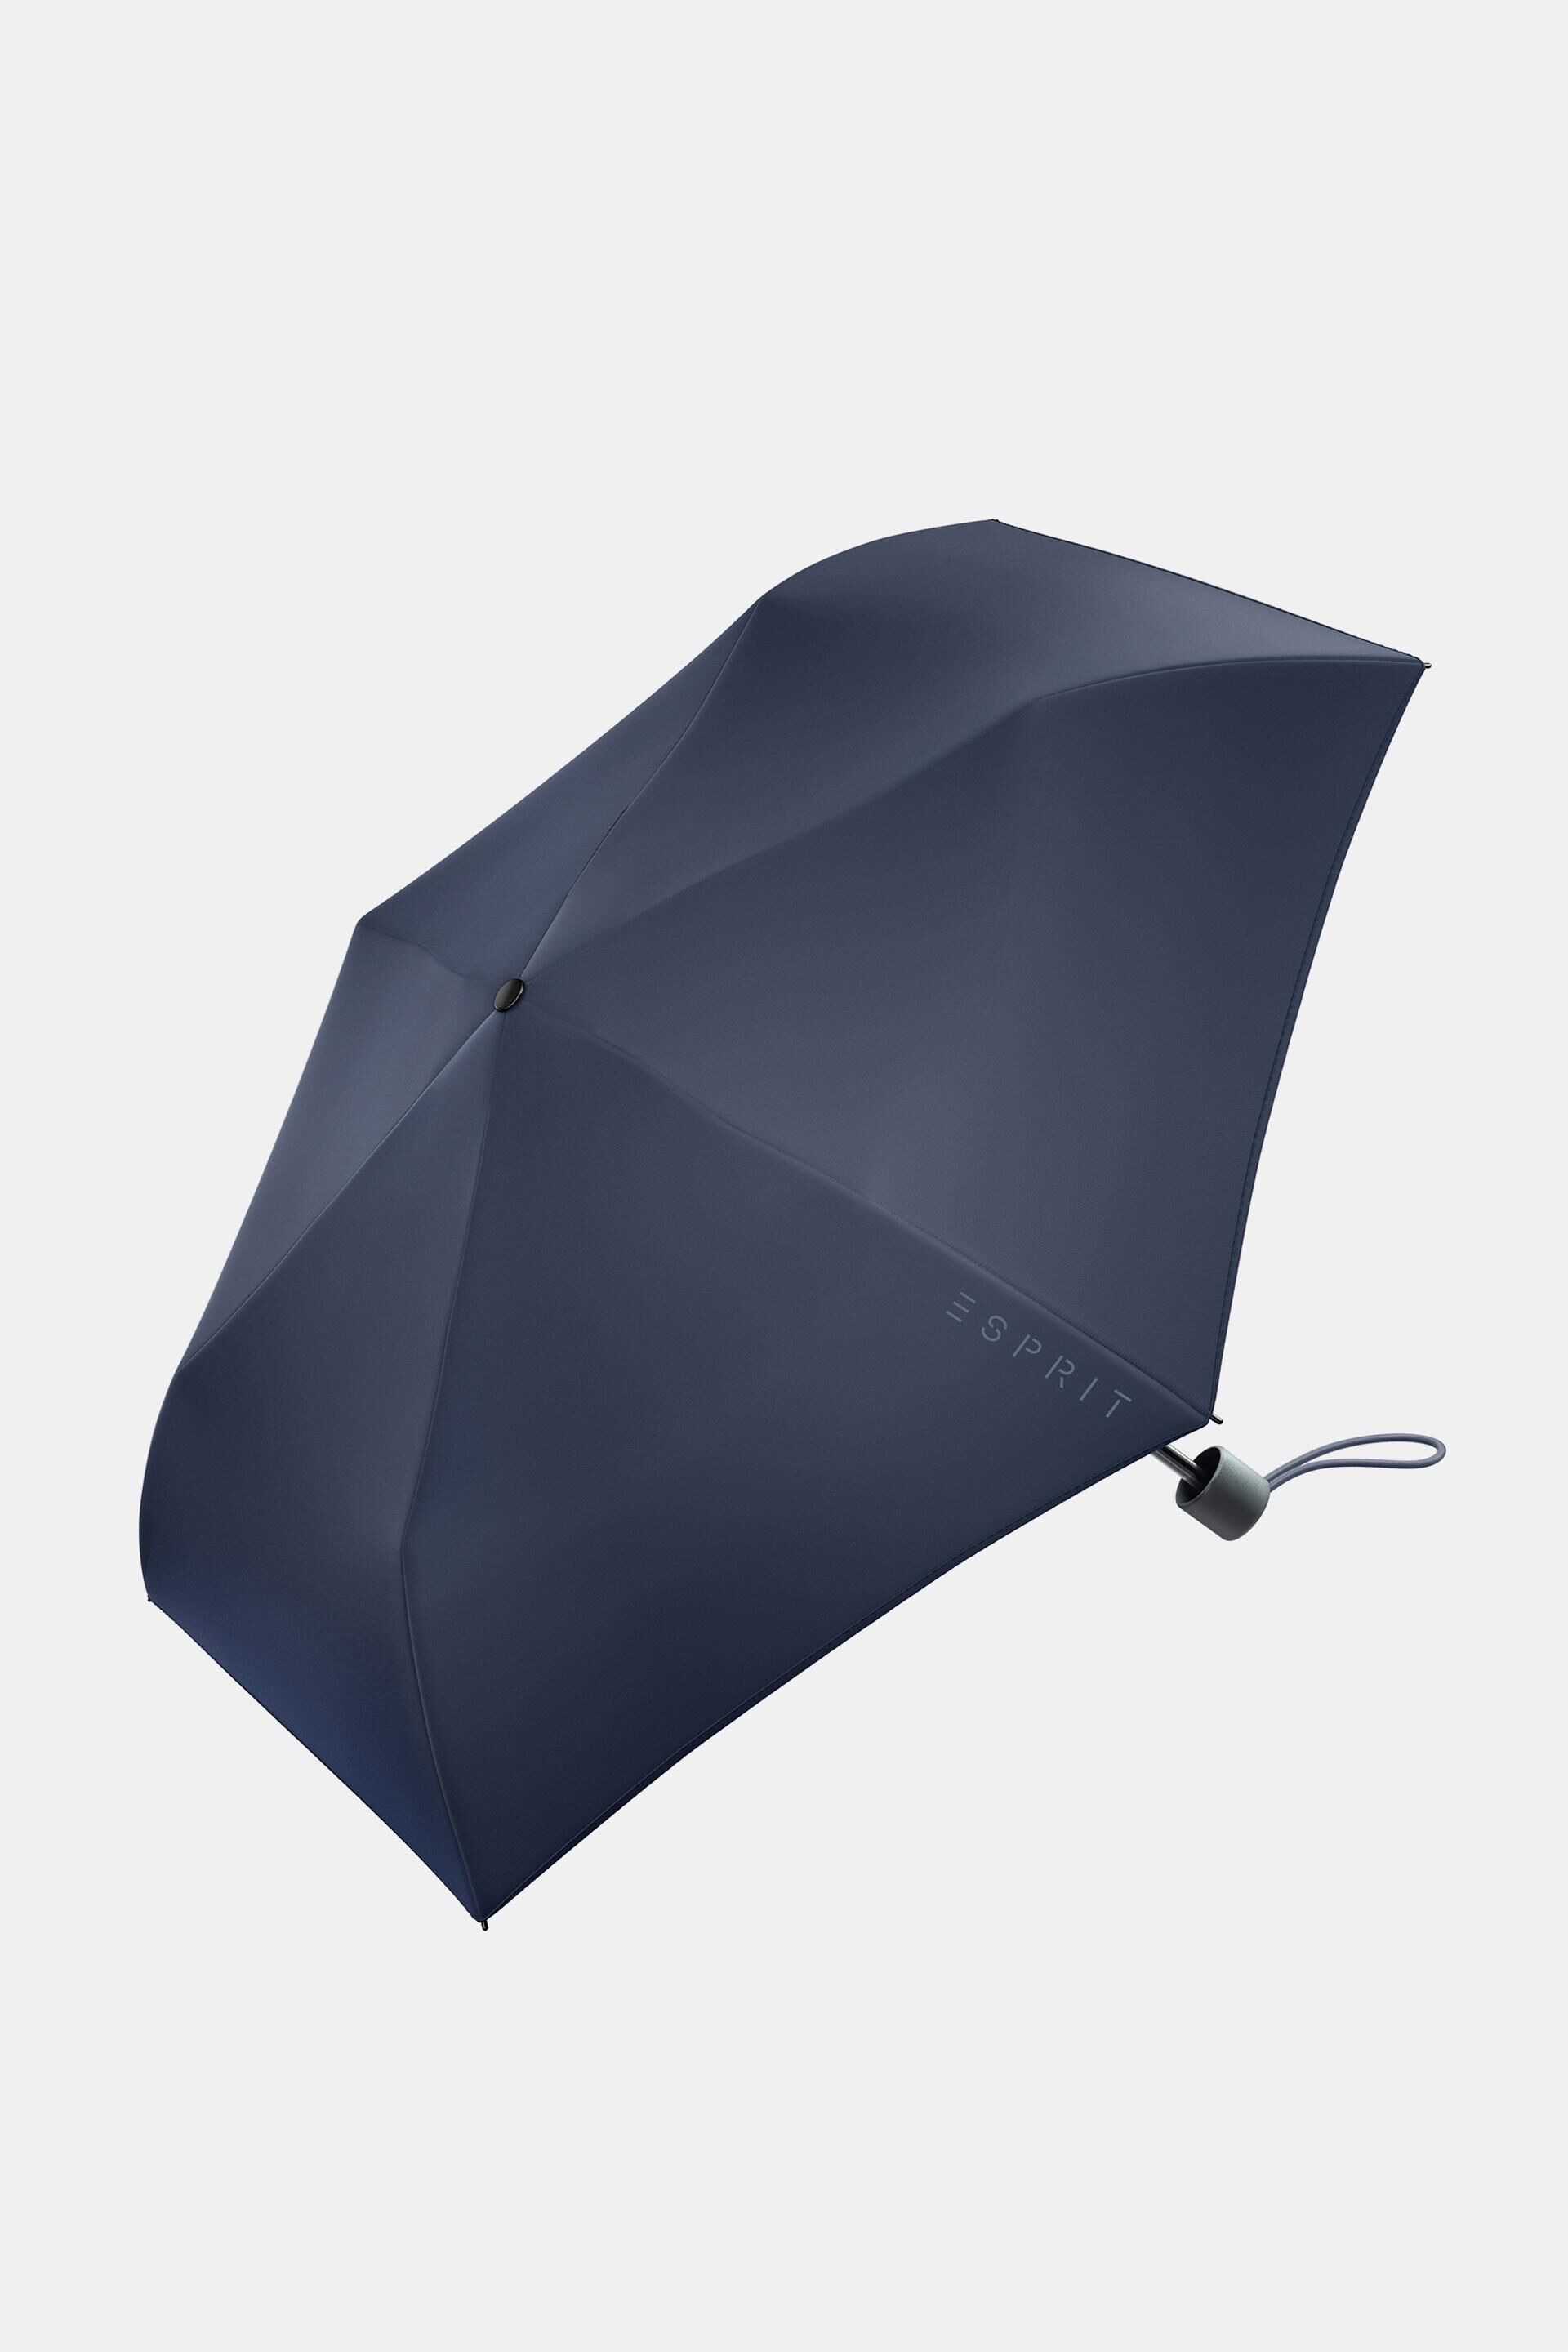 Esprit Online Store Pocket umbrella in navy blue print with logo